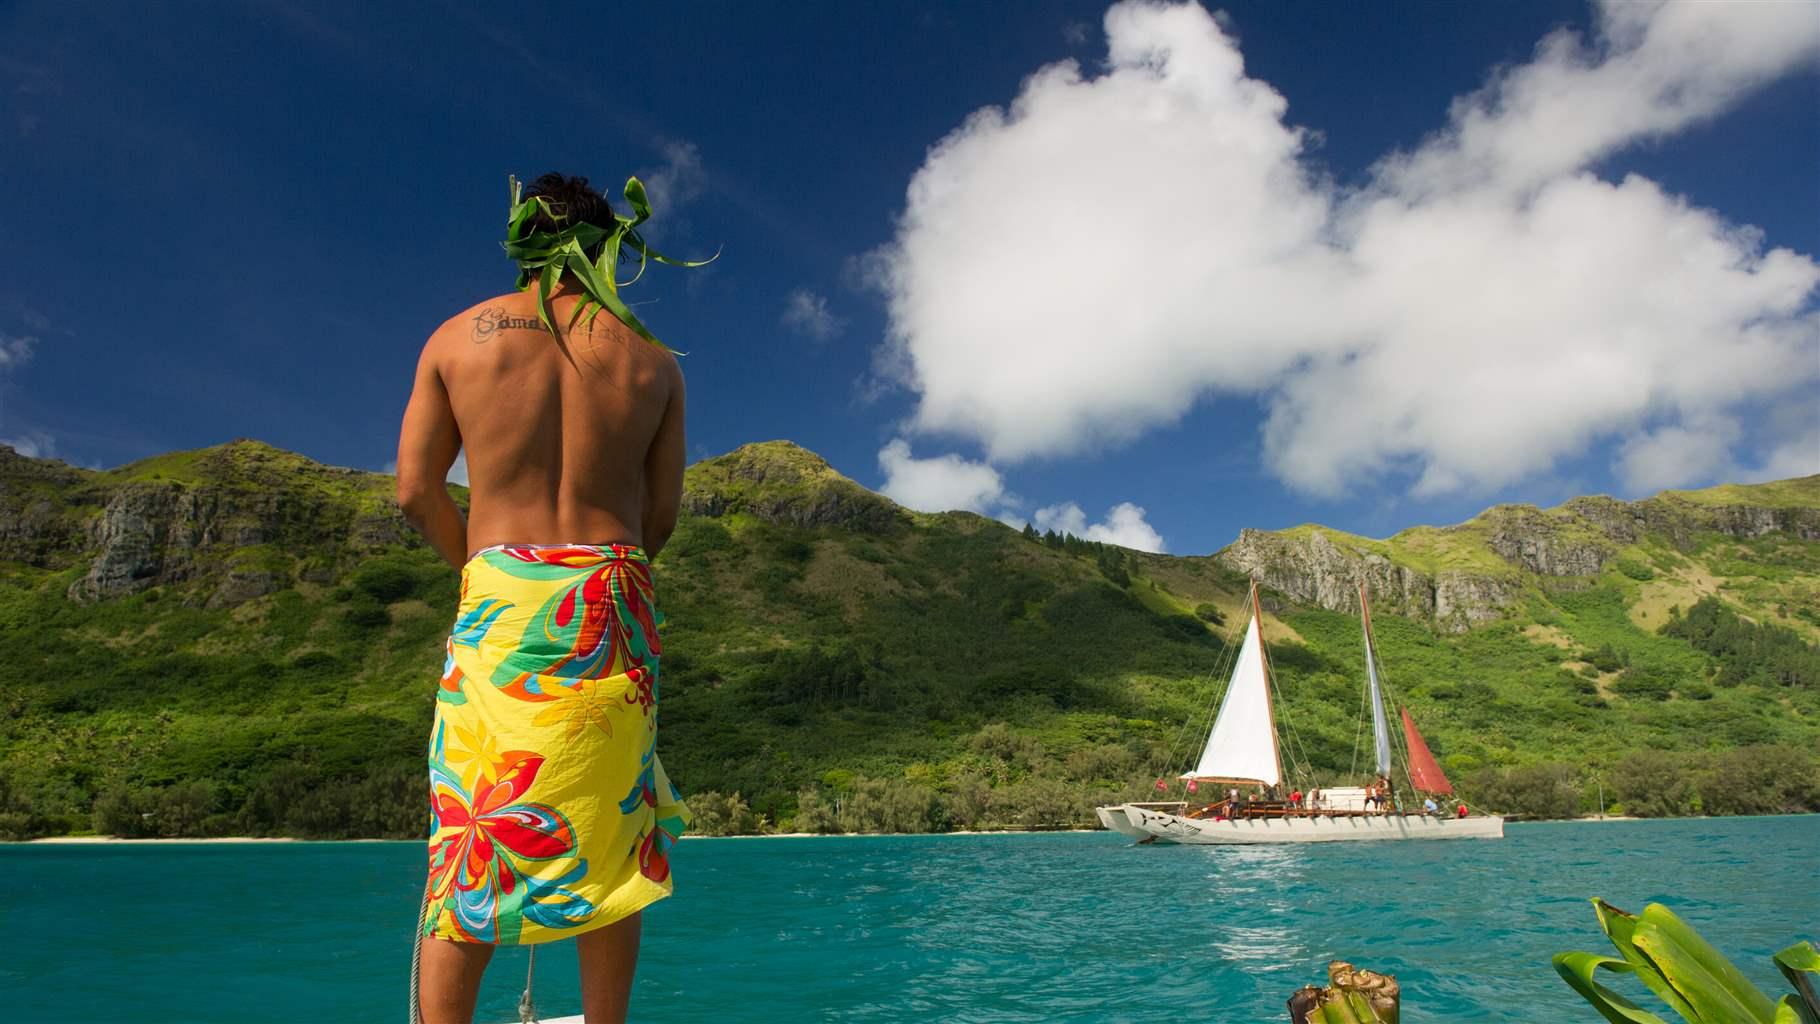 A resident of Raivavae Island looks on as the Fa’afaite, a traditional Polynesian wayfinding canoe, sails in the island’s lagoon.